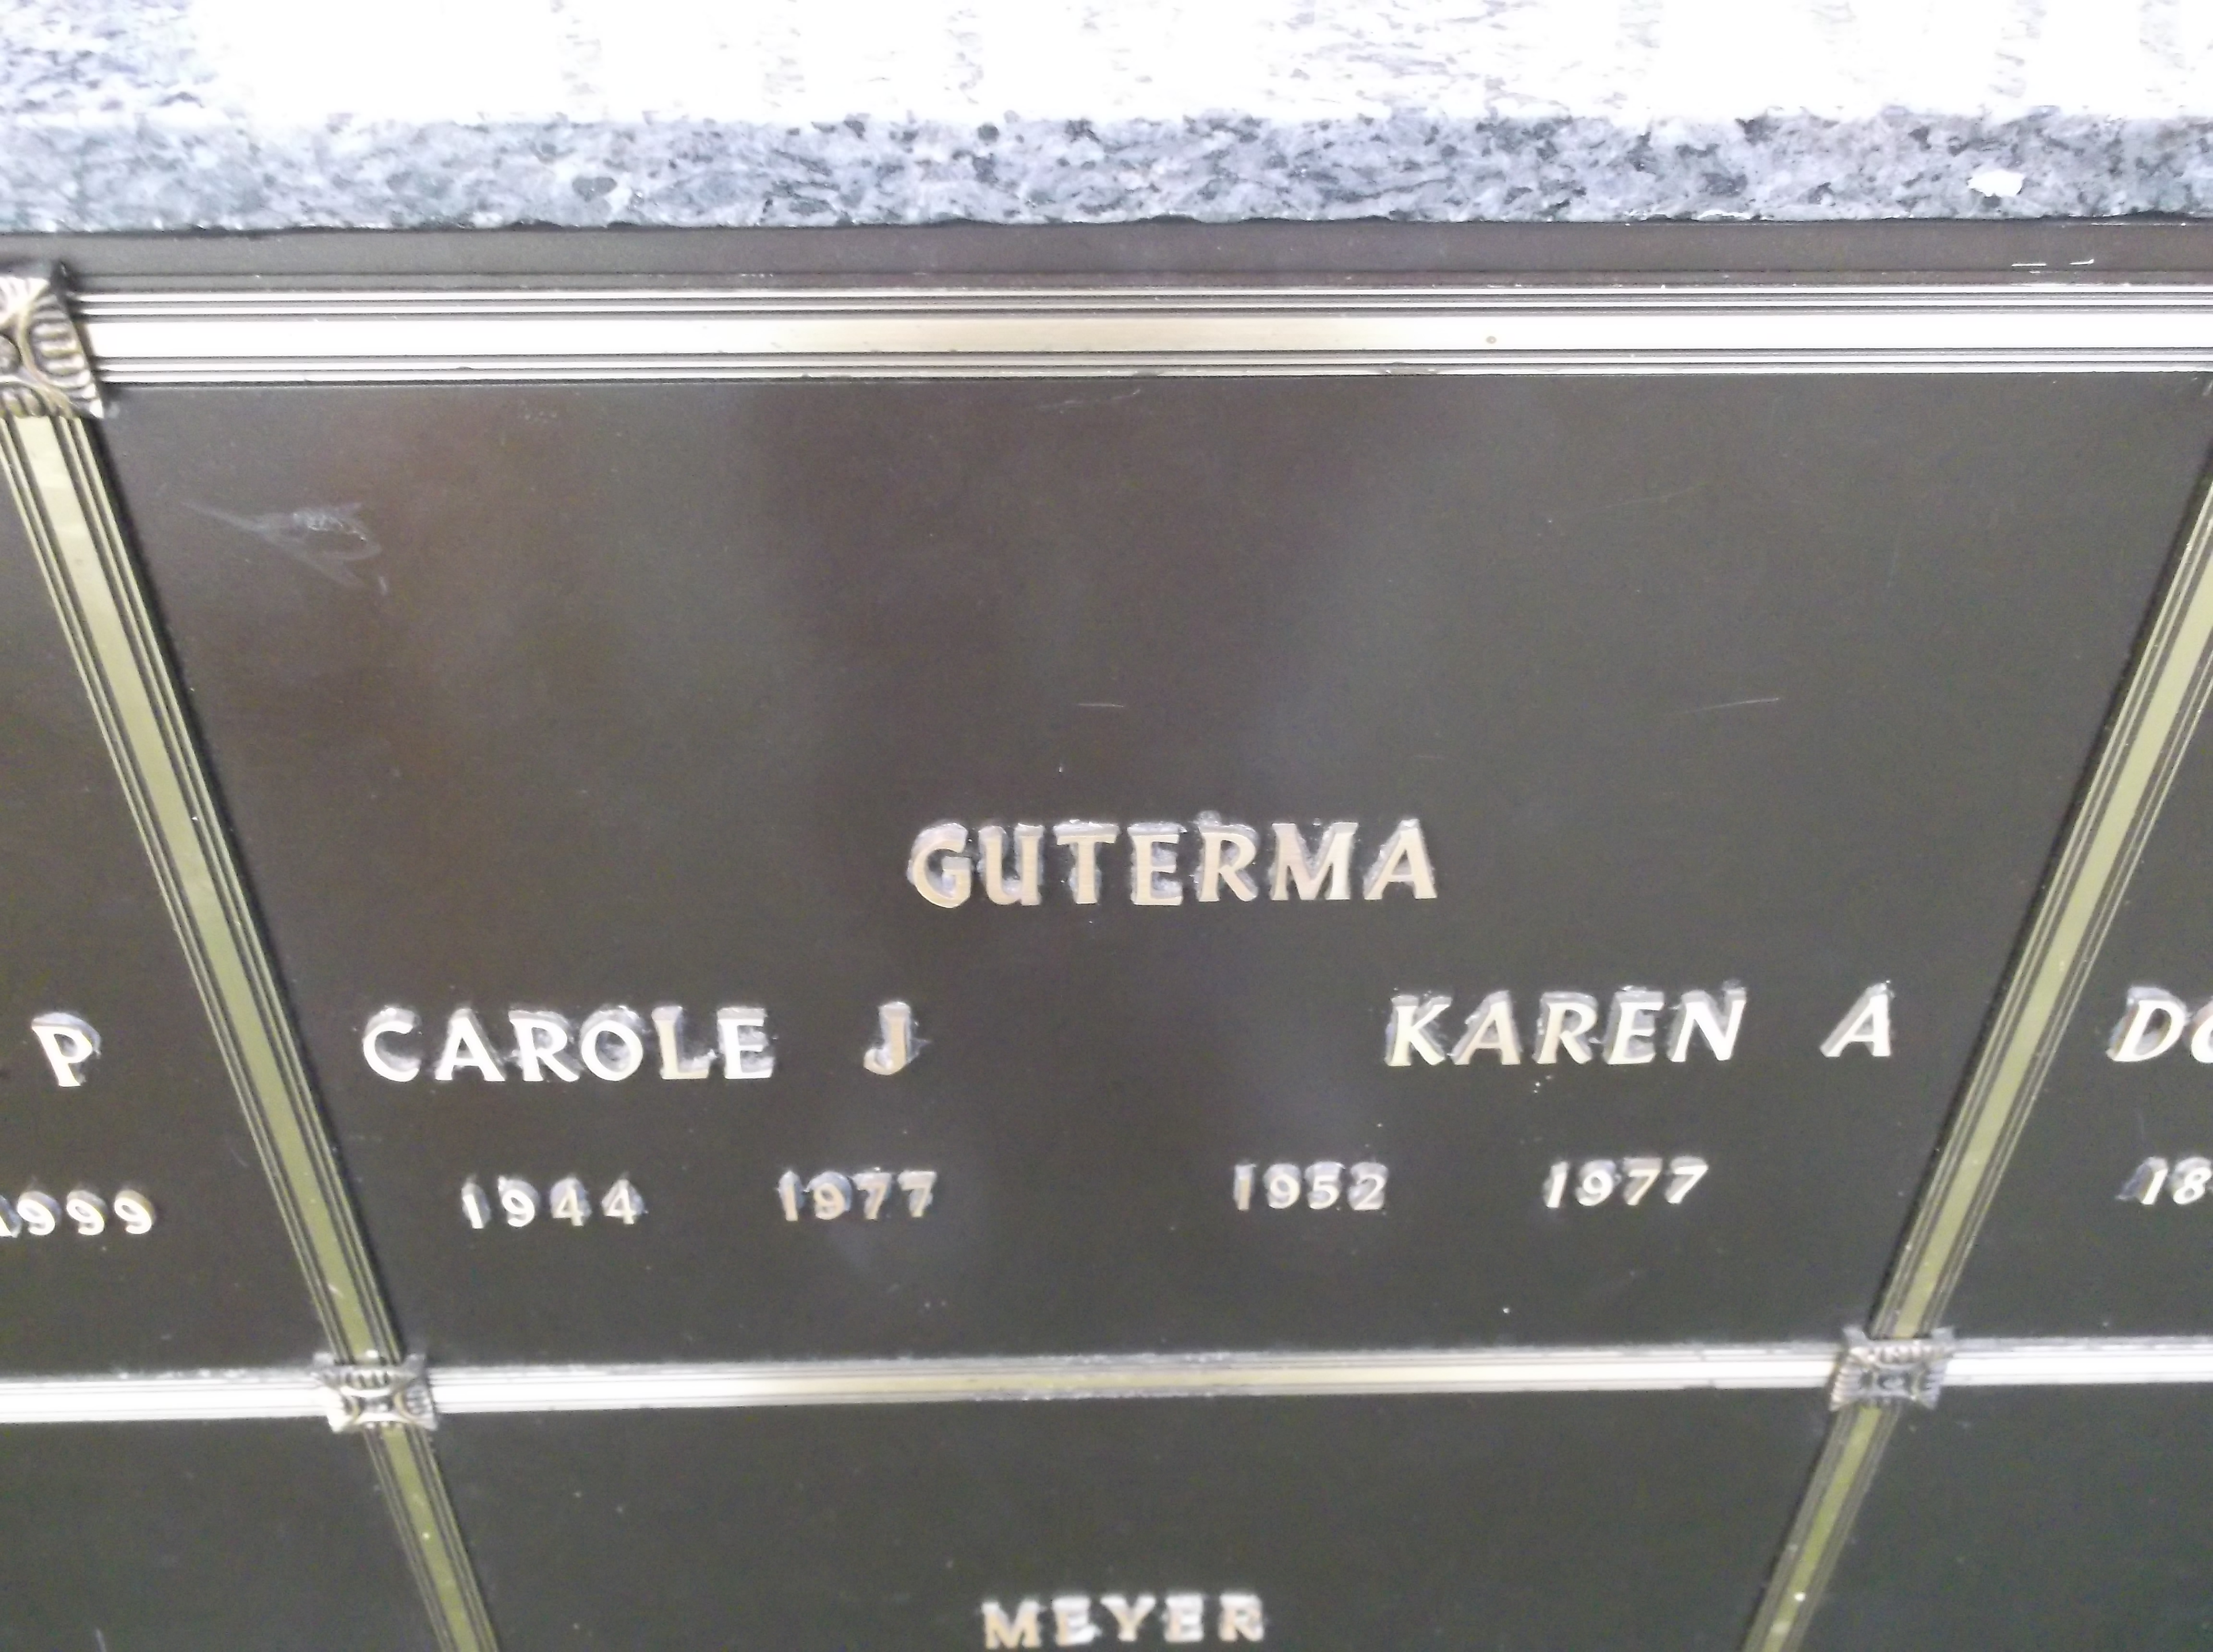 Karen A Guterma